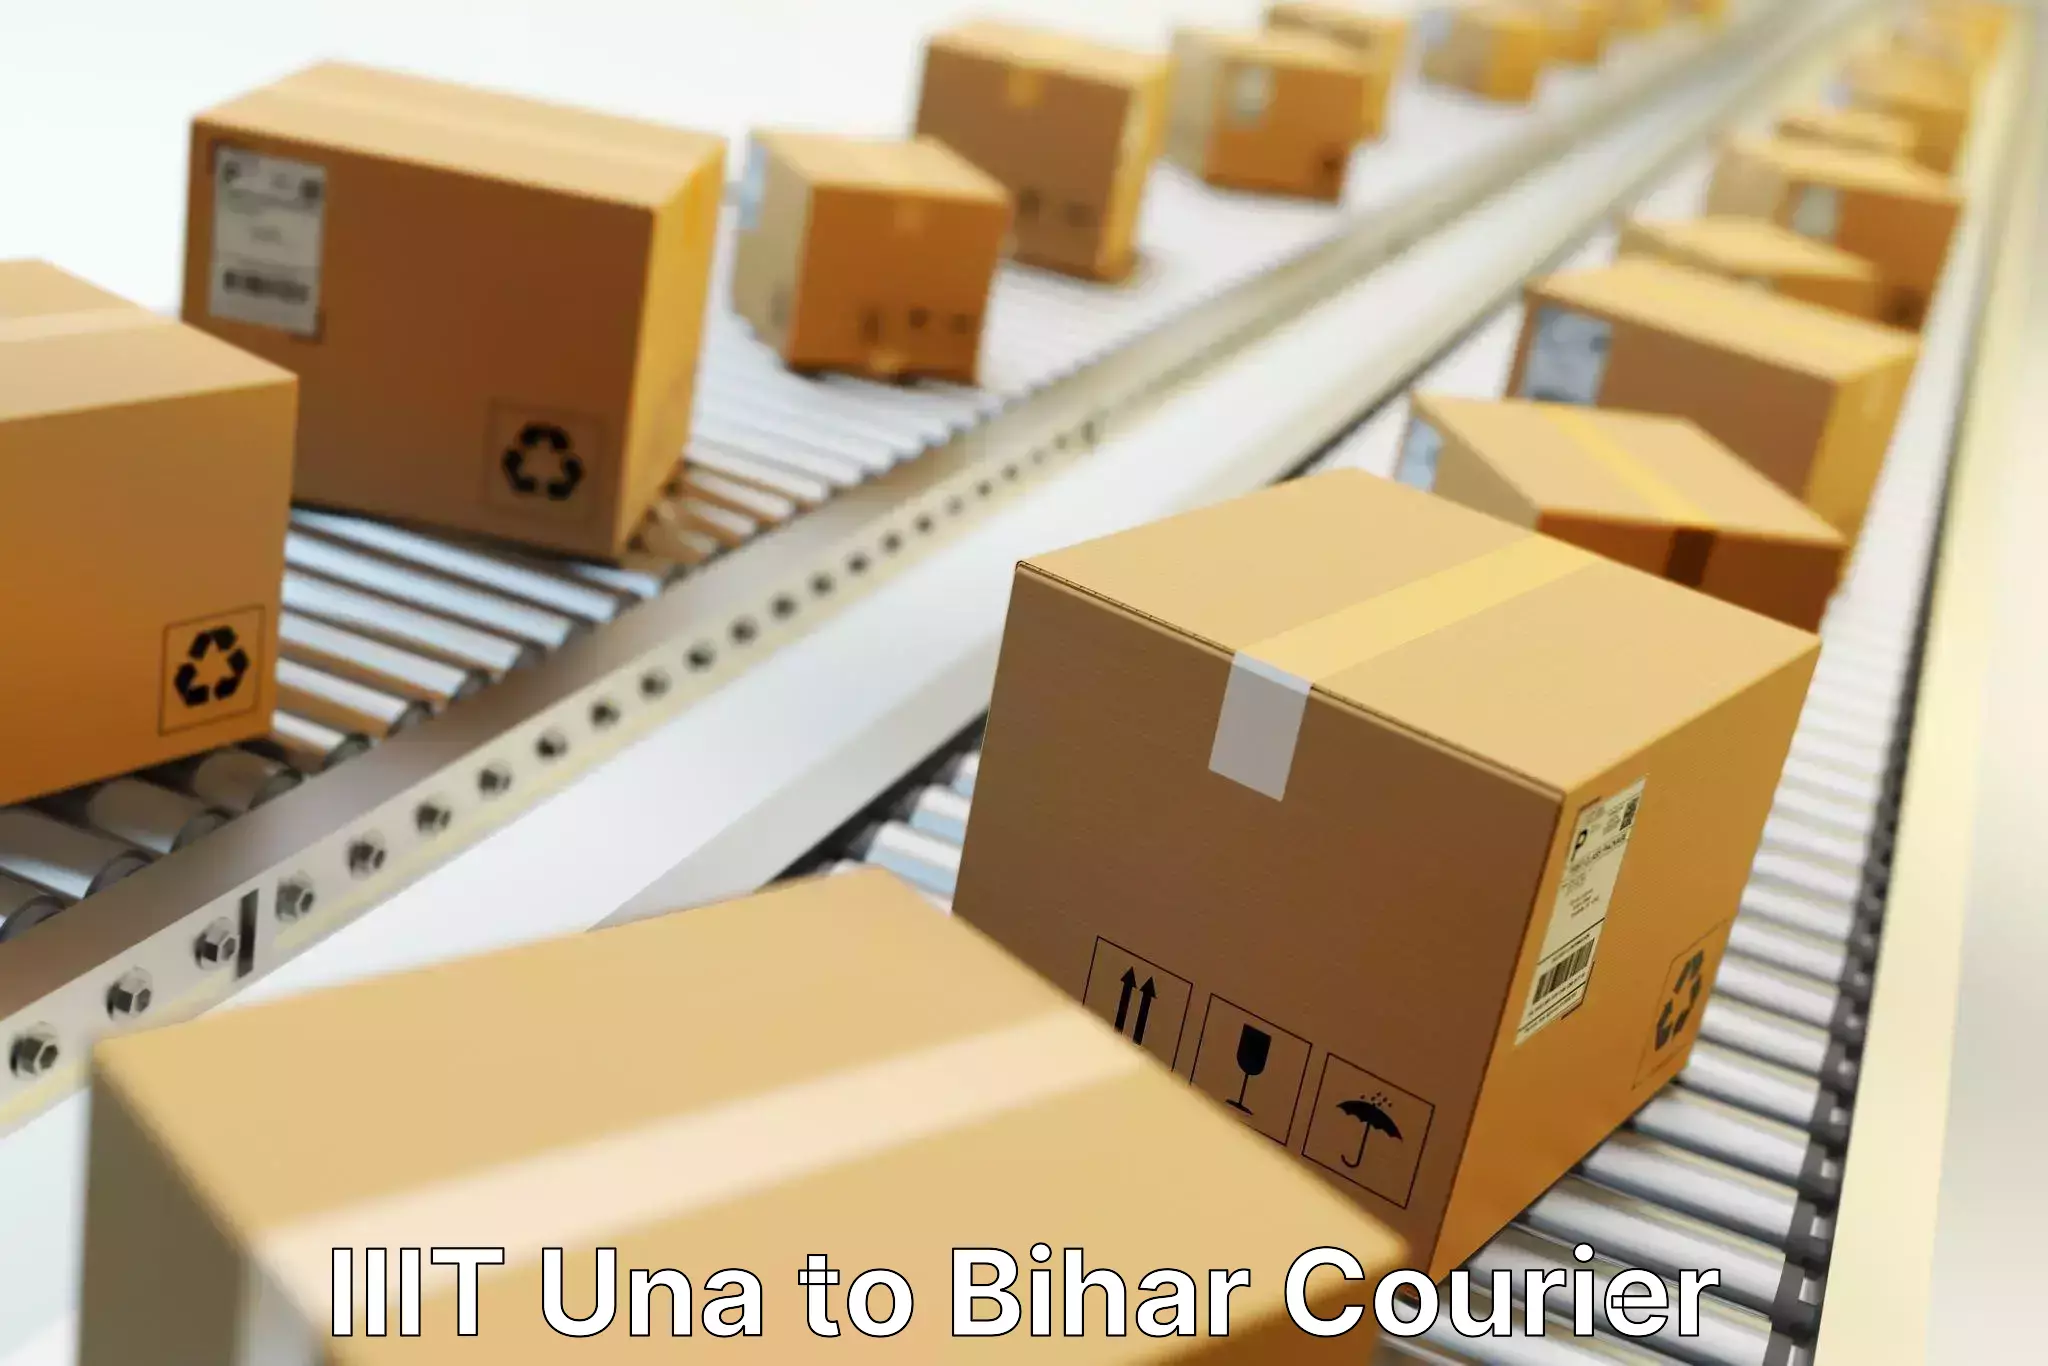 Express logistics IIIT Una to Bihar